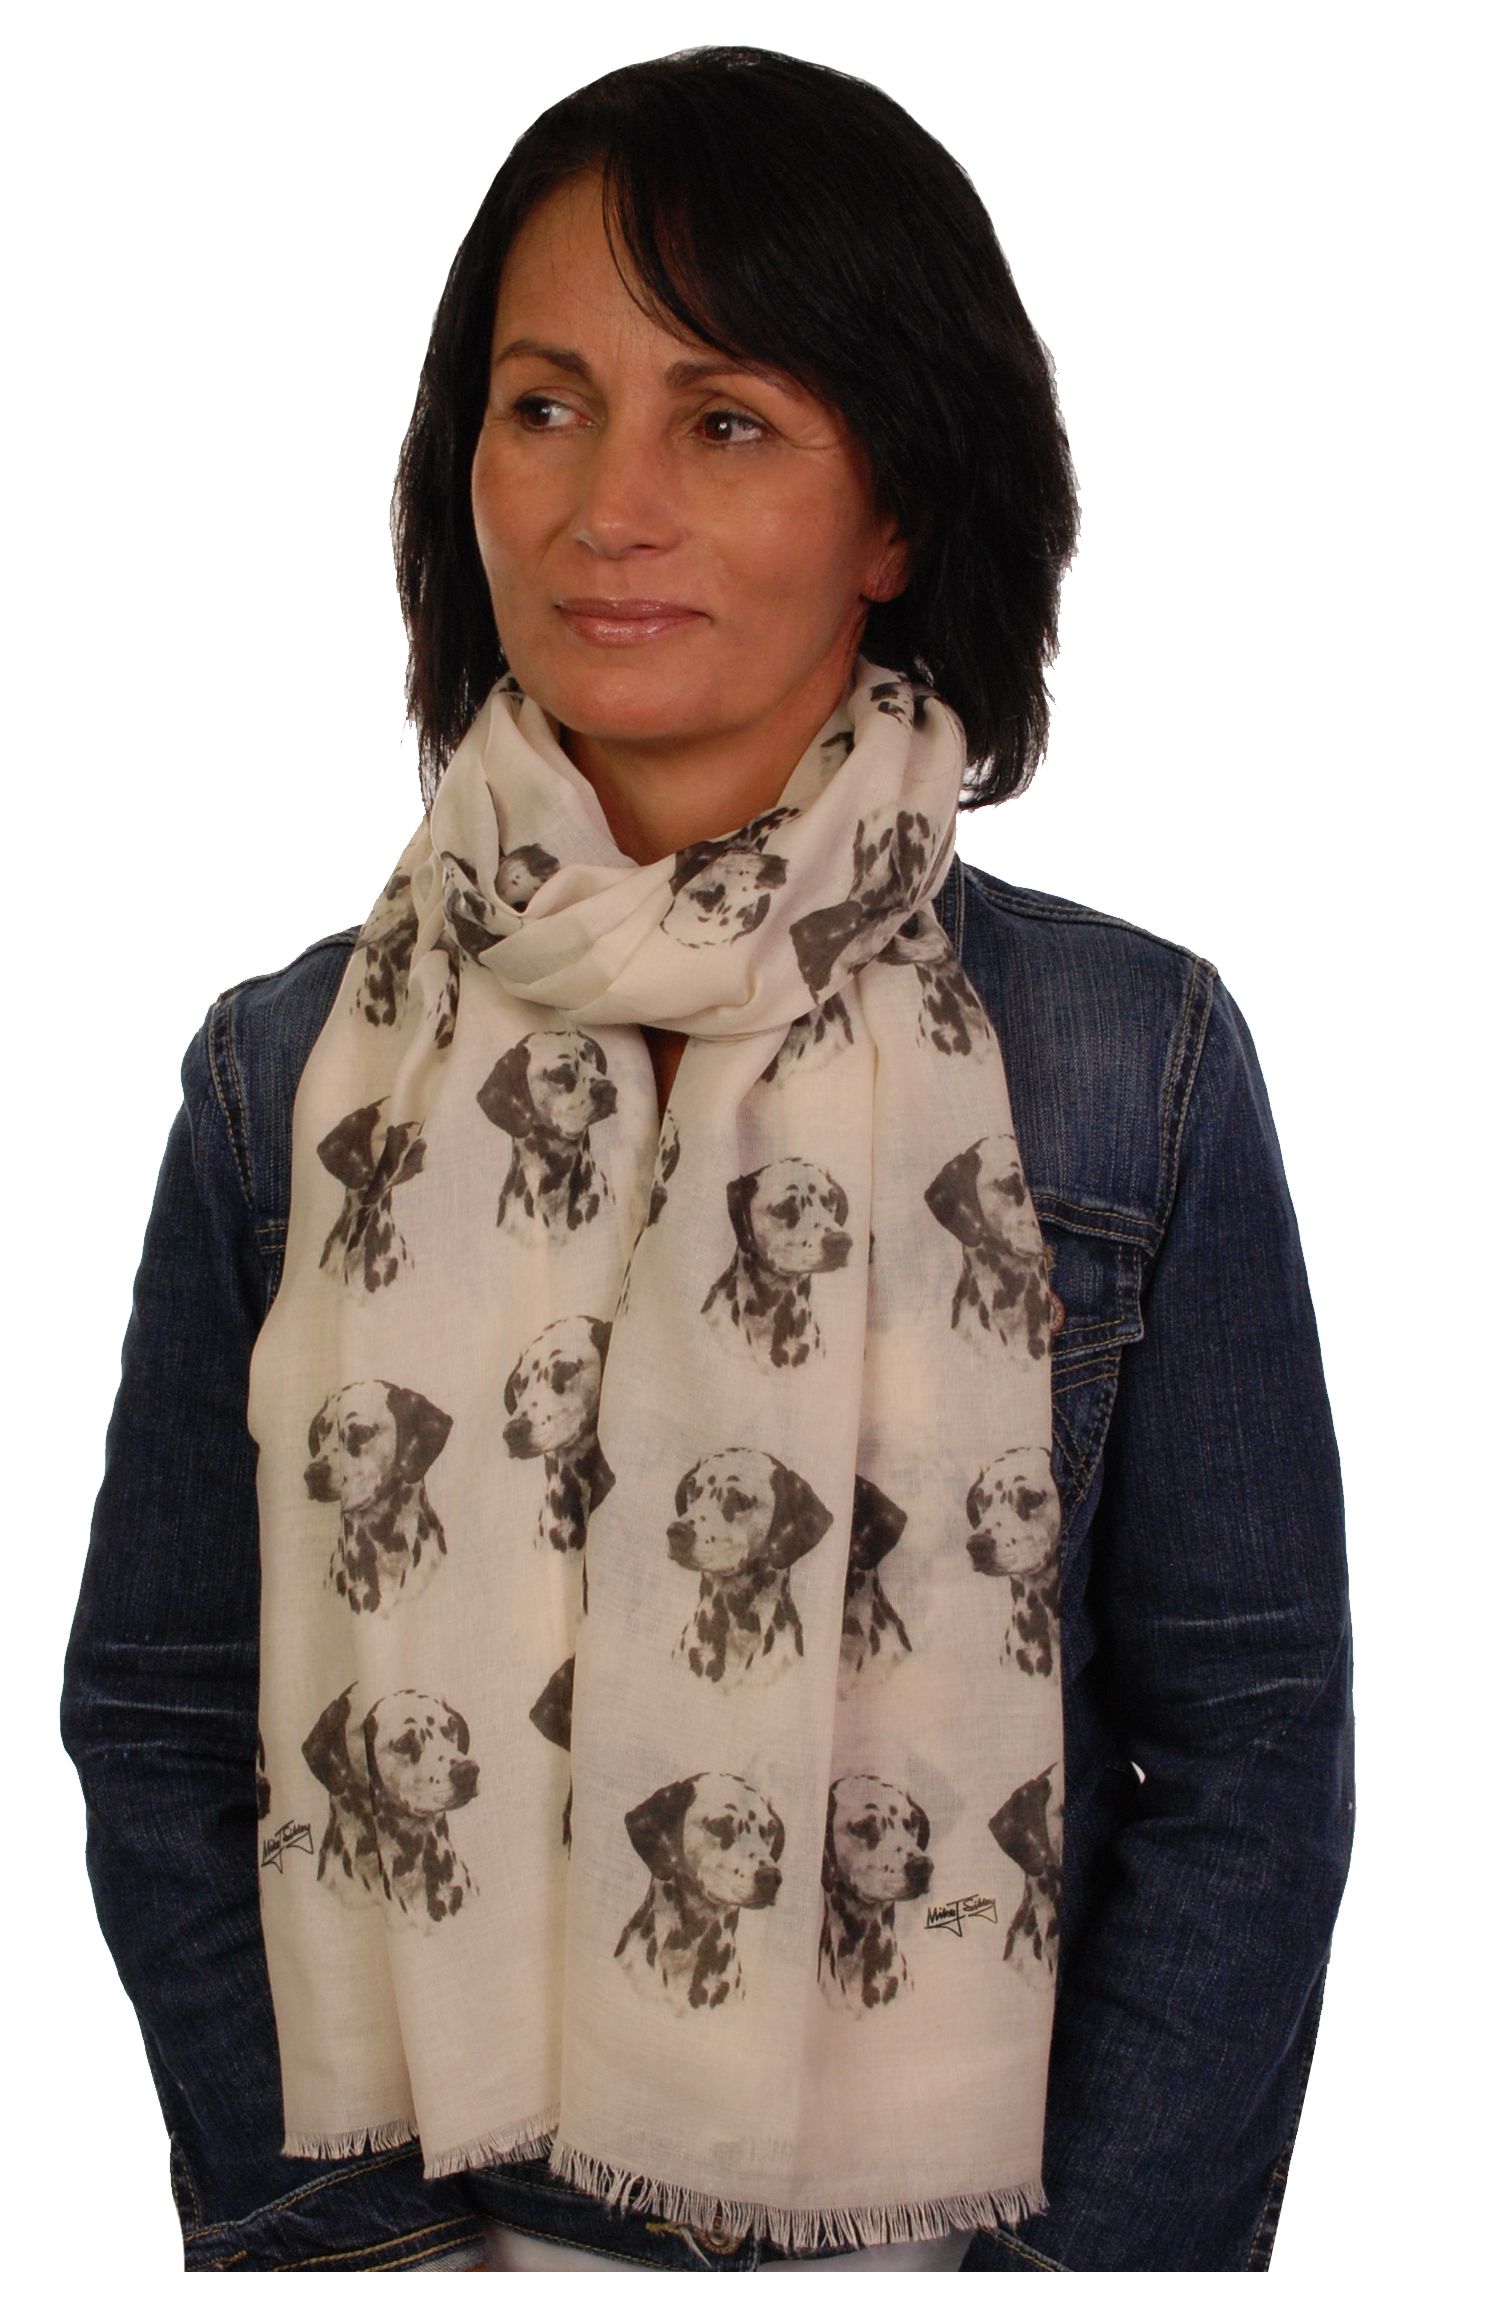 Mike Sibley Dalmatian licensed design ladies fashion scarf